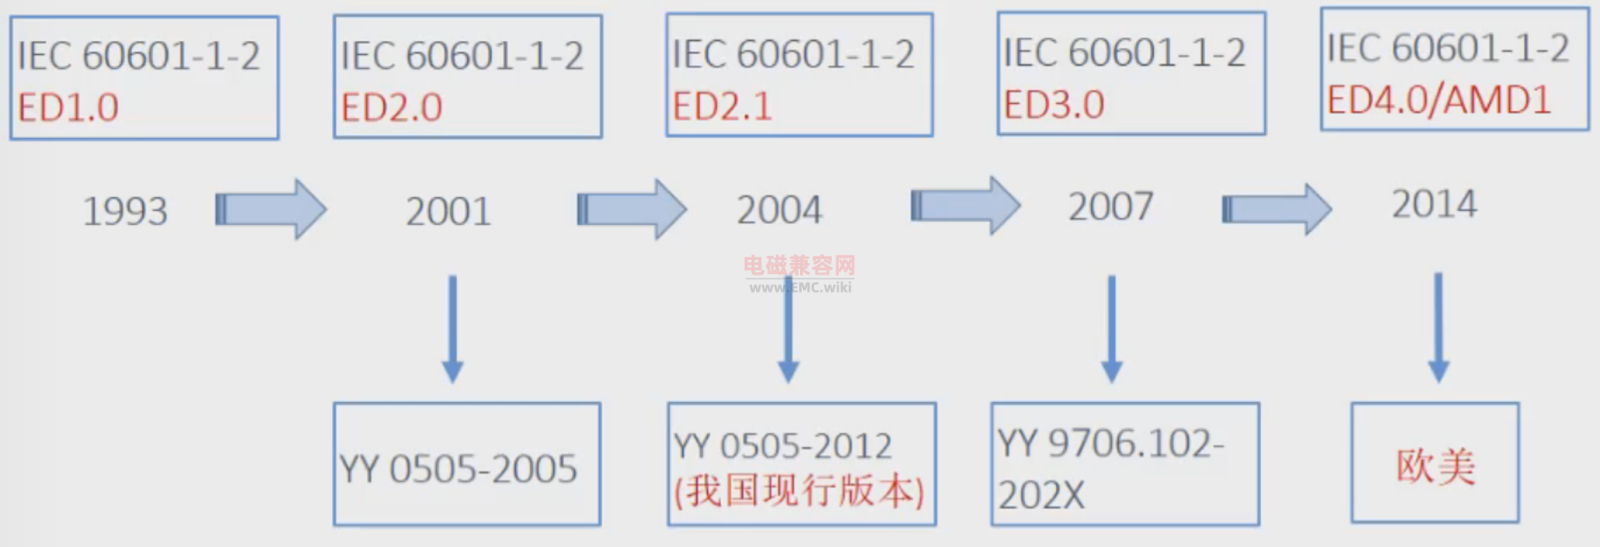 IEC 60601-1-2版本迭代